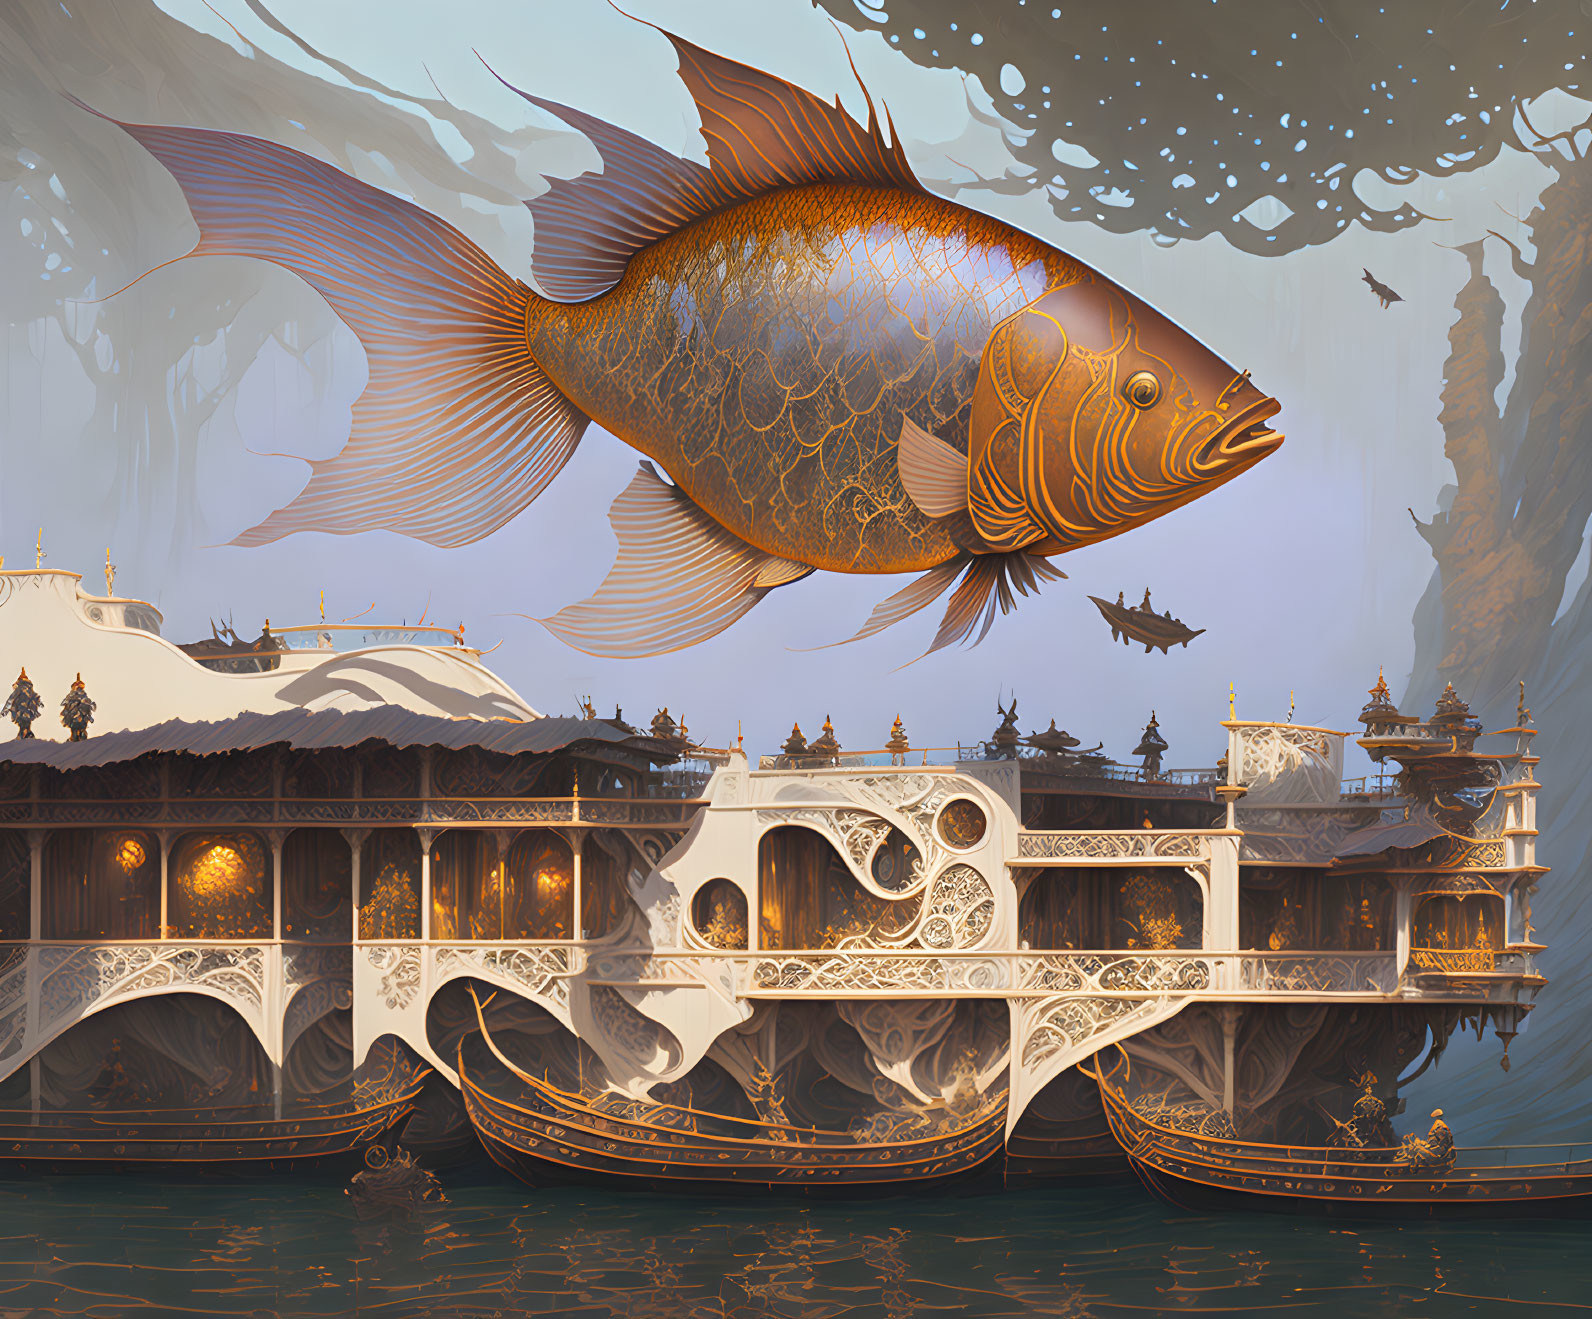 Giant fish floats above ornate floating buildings in serene scene